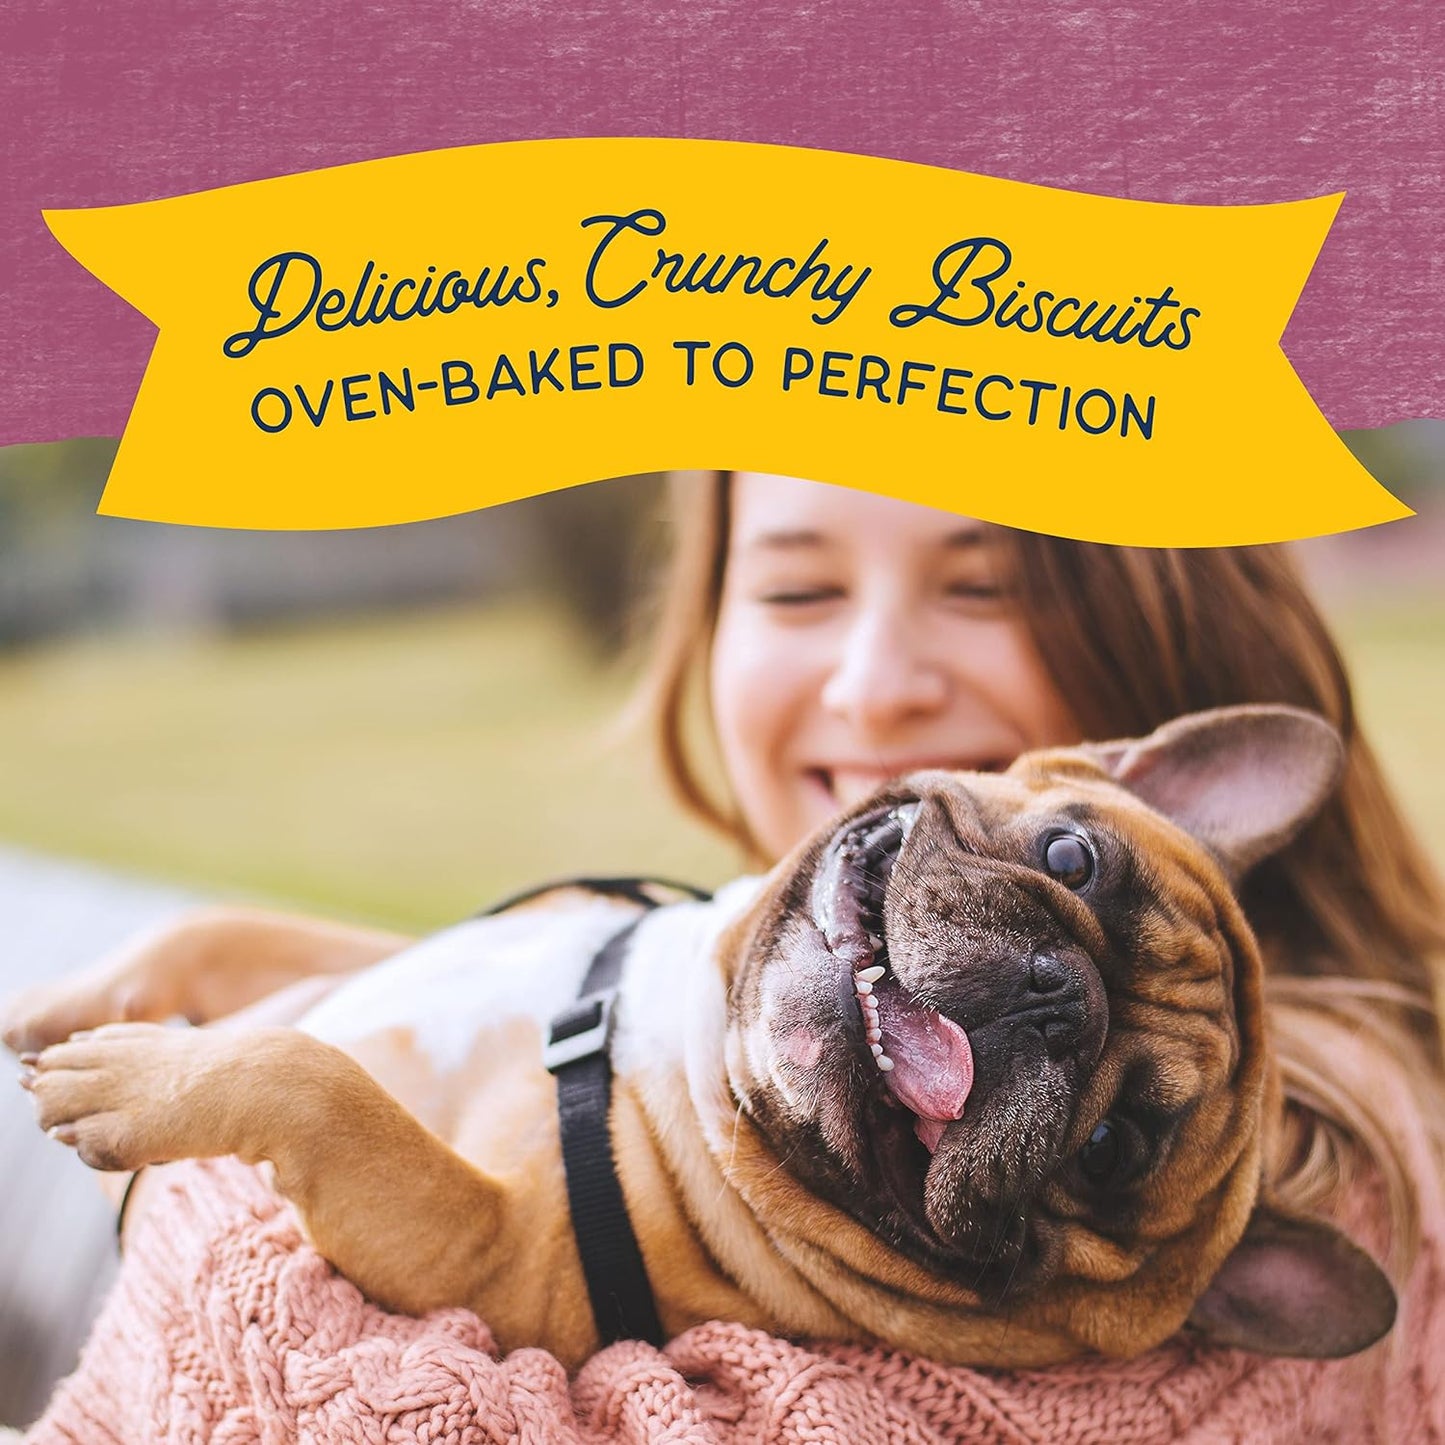 Natural Balance Limited Ingredient Crunchy Biscuits Real Venison Recipe Dog Treat, 14-oz Bag